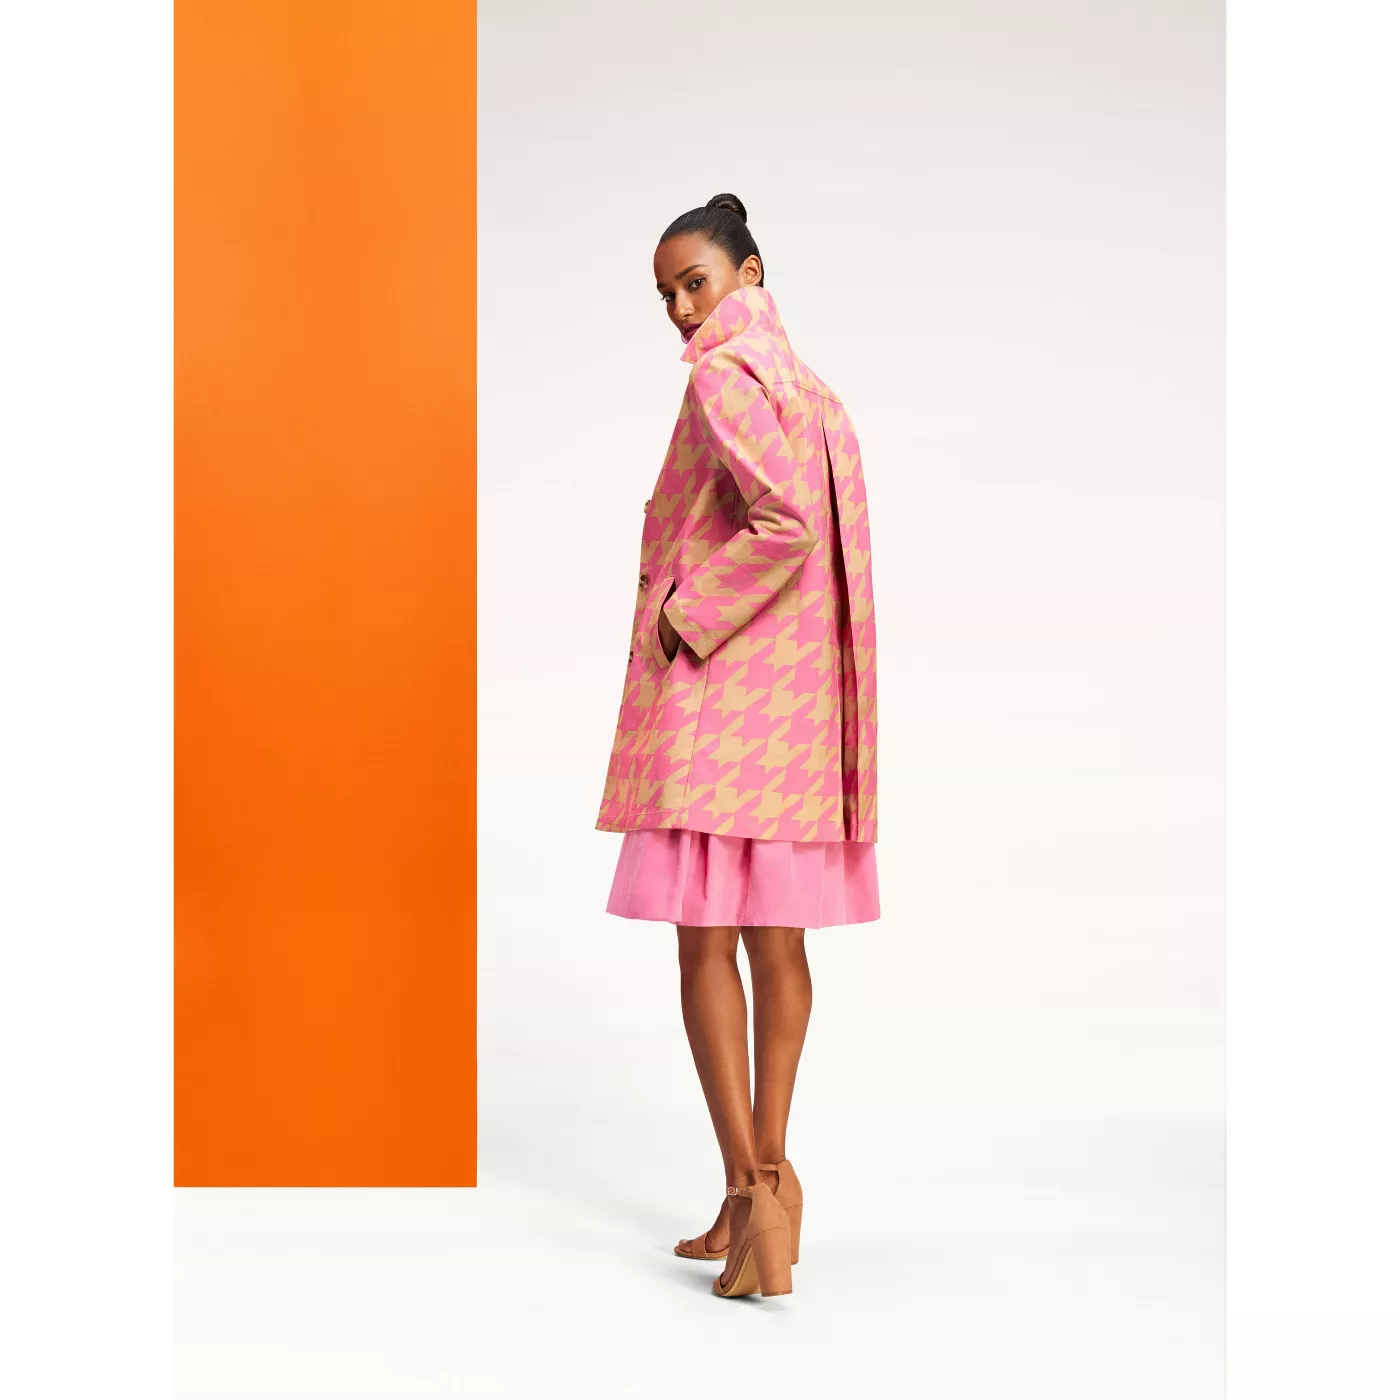 Women's Sleeveless Square Neck Corduroy Dress - Isaac Mizrahi for Target Pink - image 6 of 6